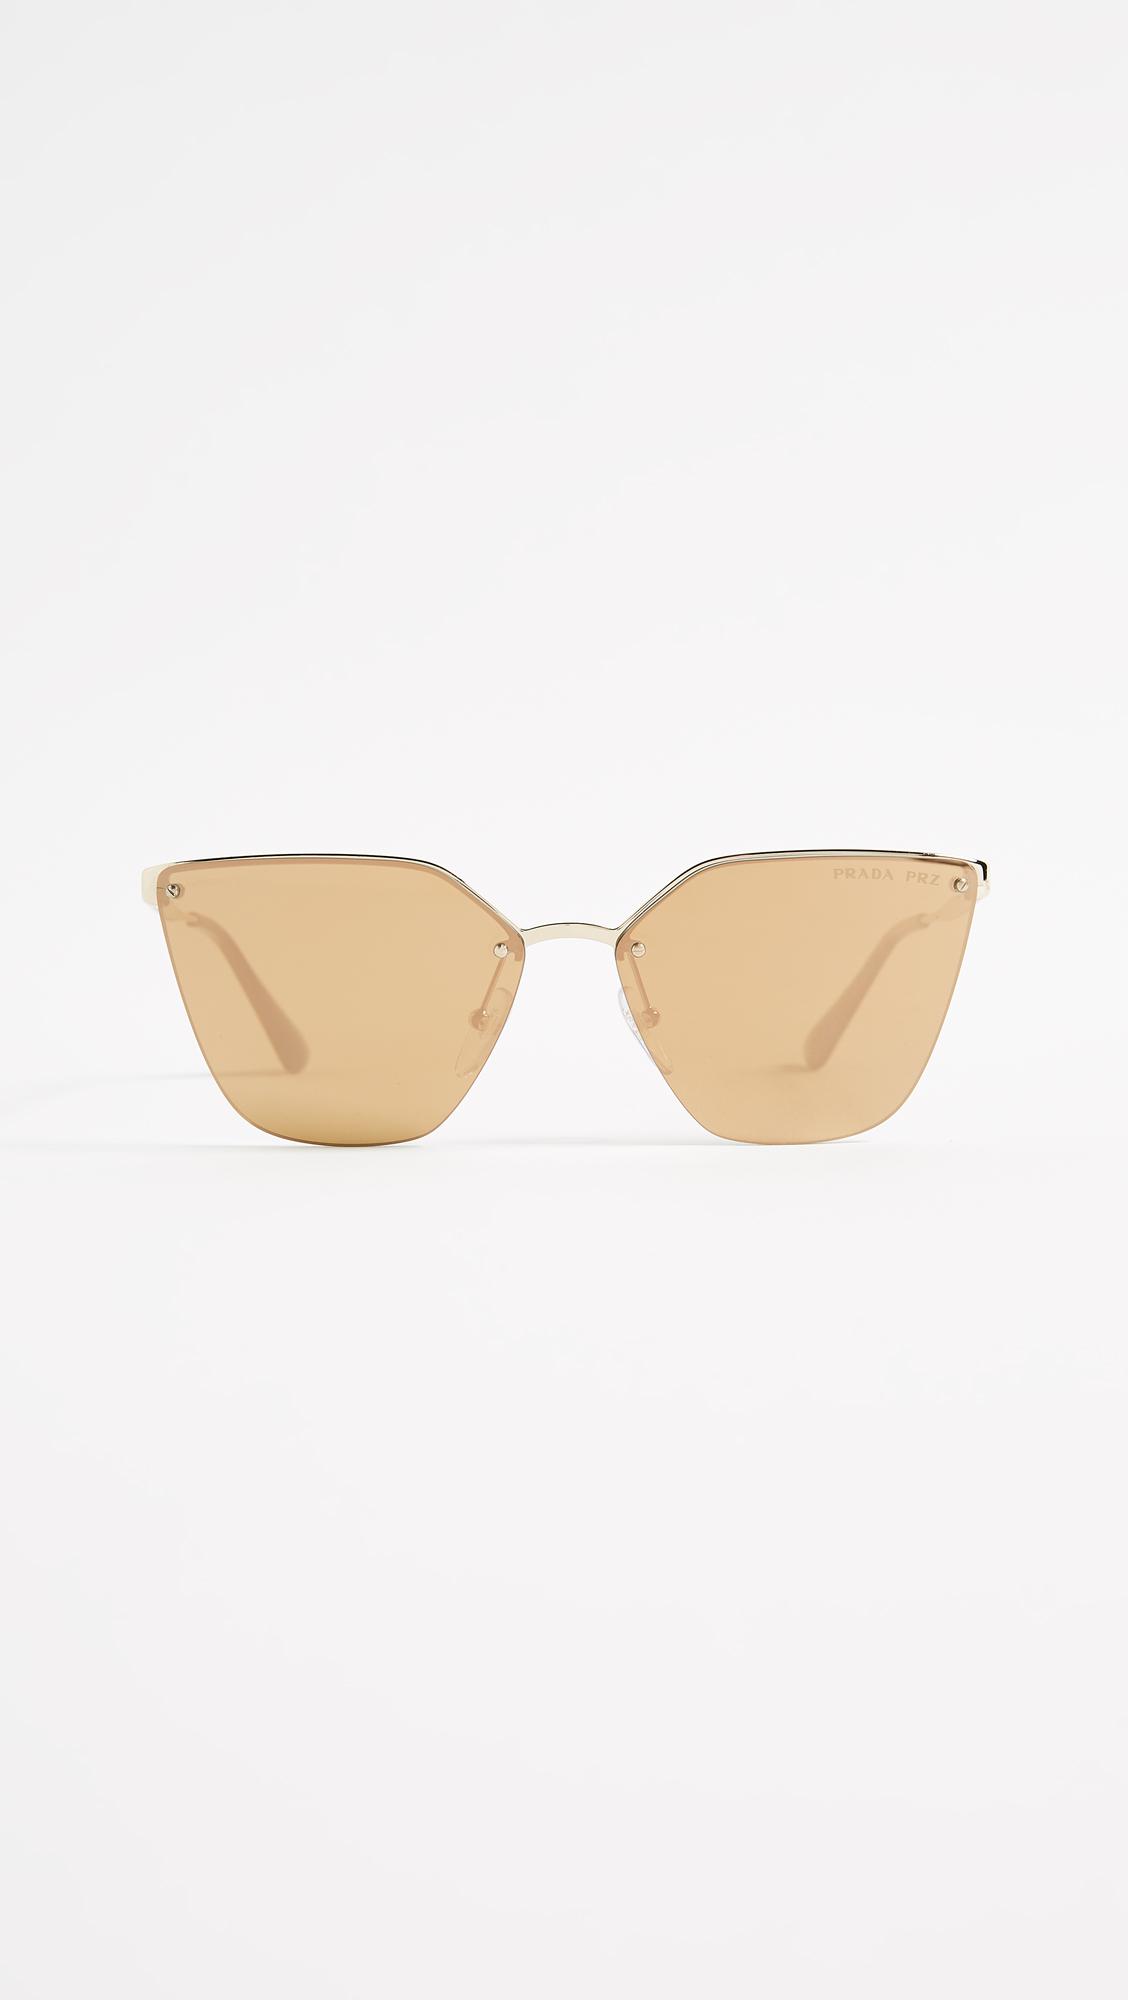 Prada Cinema Evolution Sunglasses in Metallic | Lyst Canada